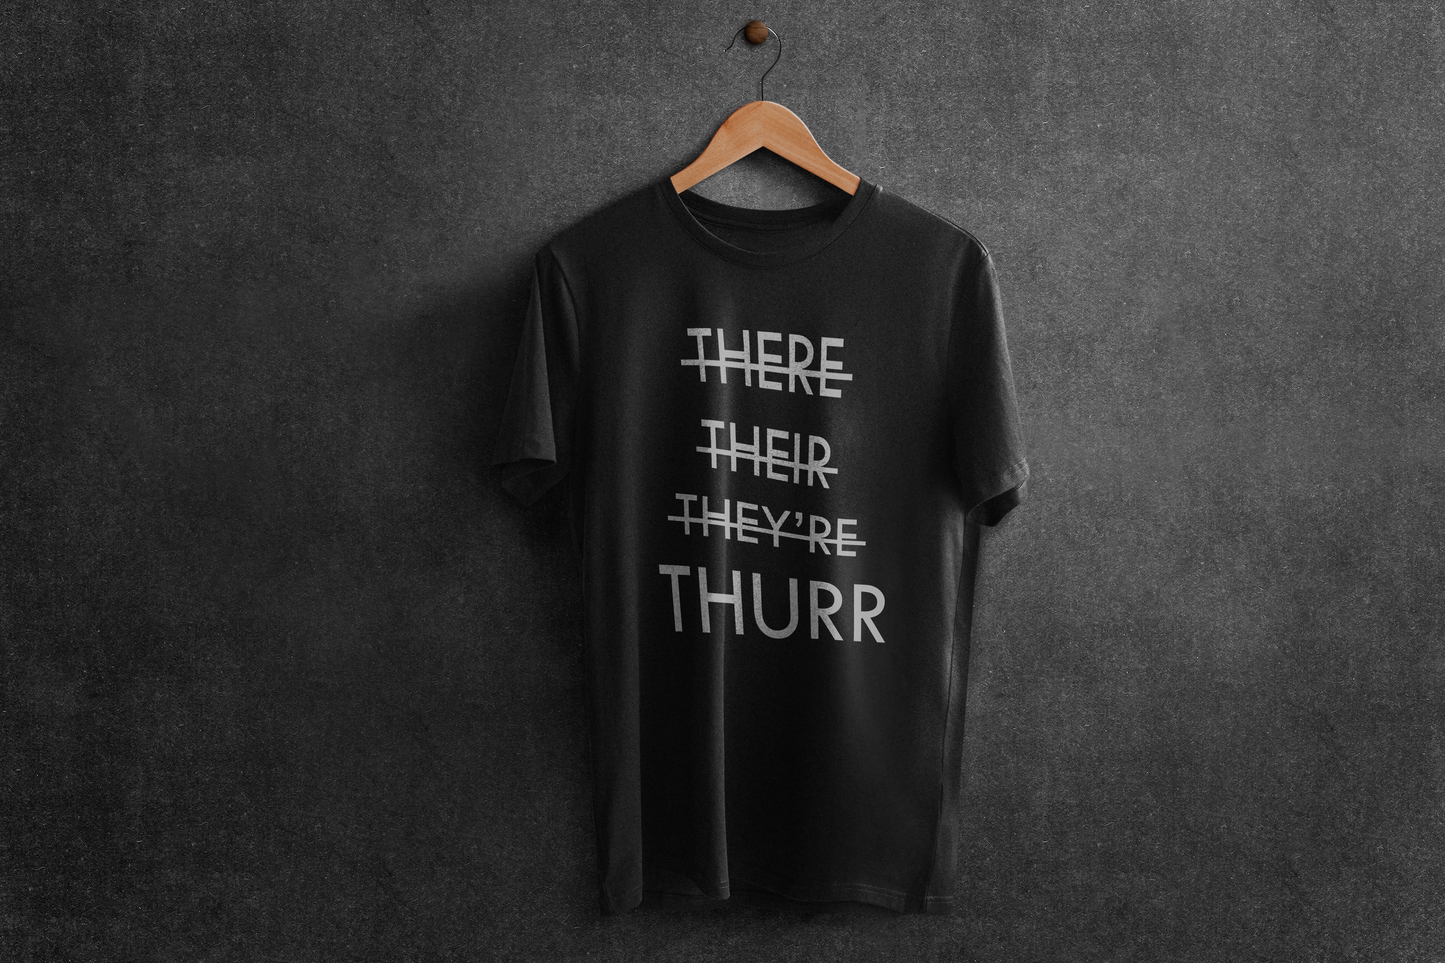 Classic Thurr Short-Sleeve Unisex T-Shirt